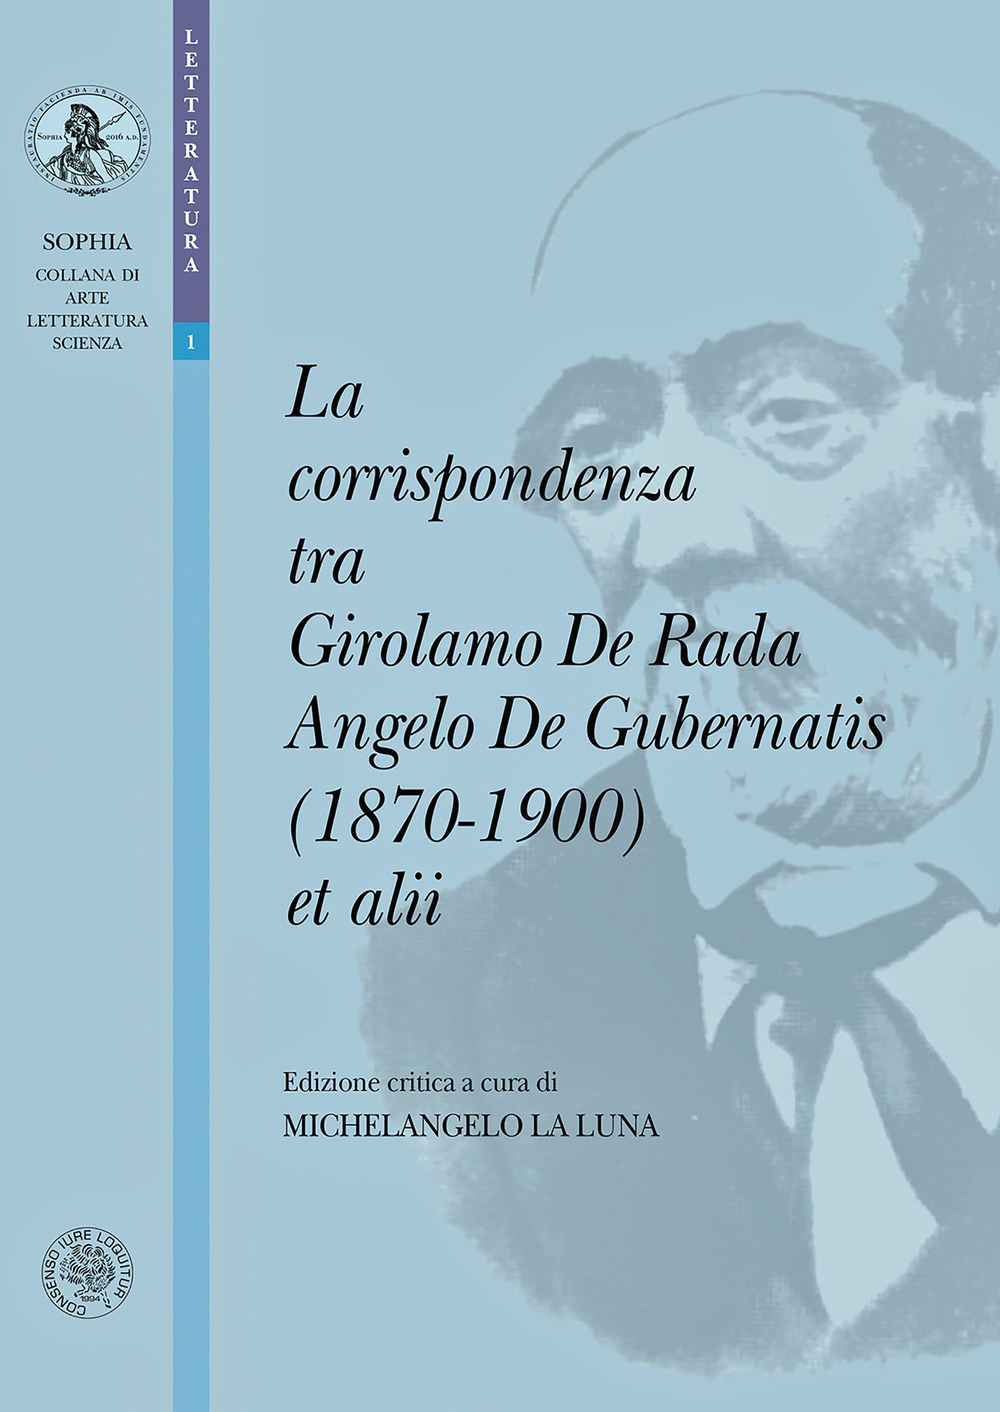 La corrispondenza tra Girolamo De Rada, Angelo De Gubernatis (1870-1900) et alii